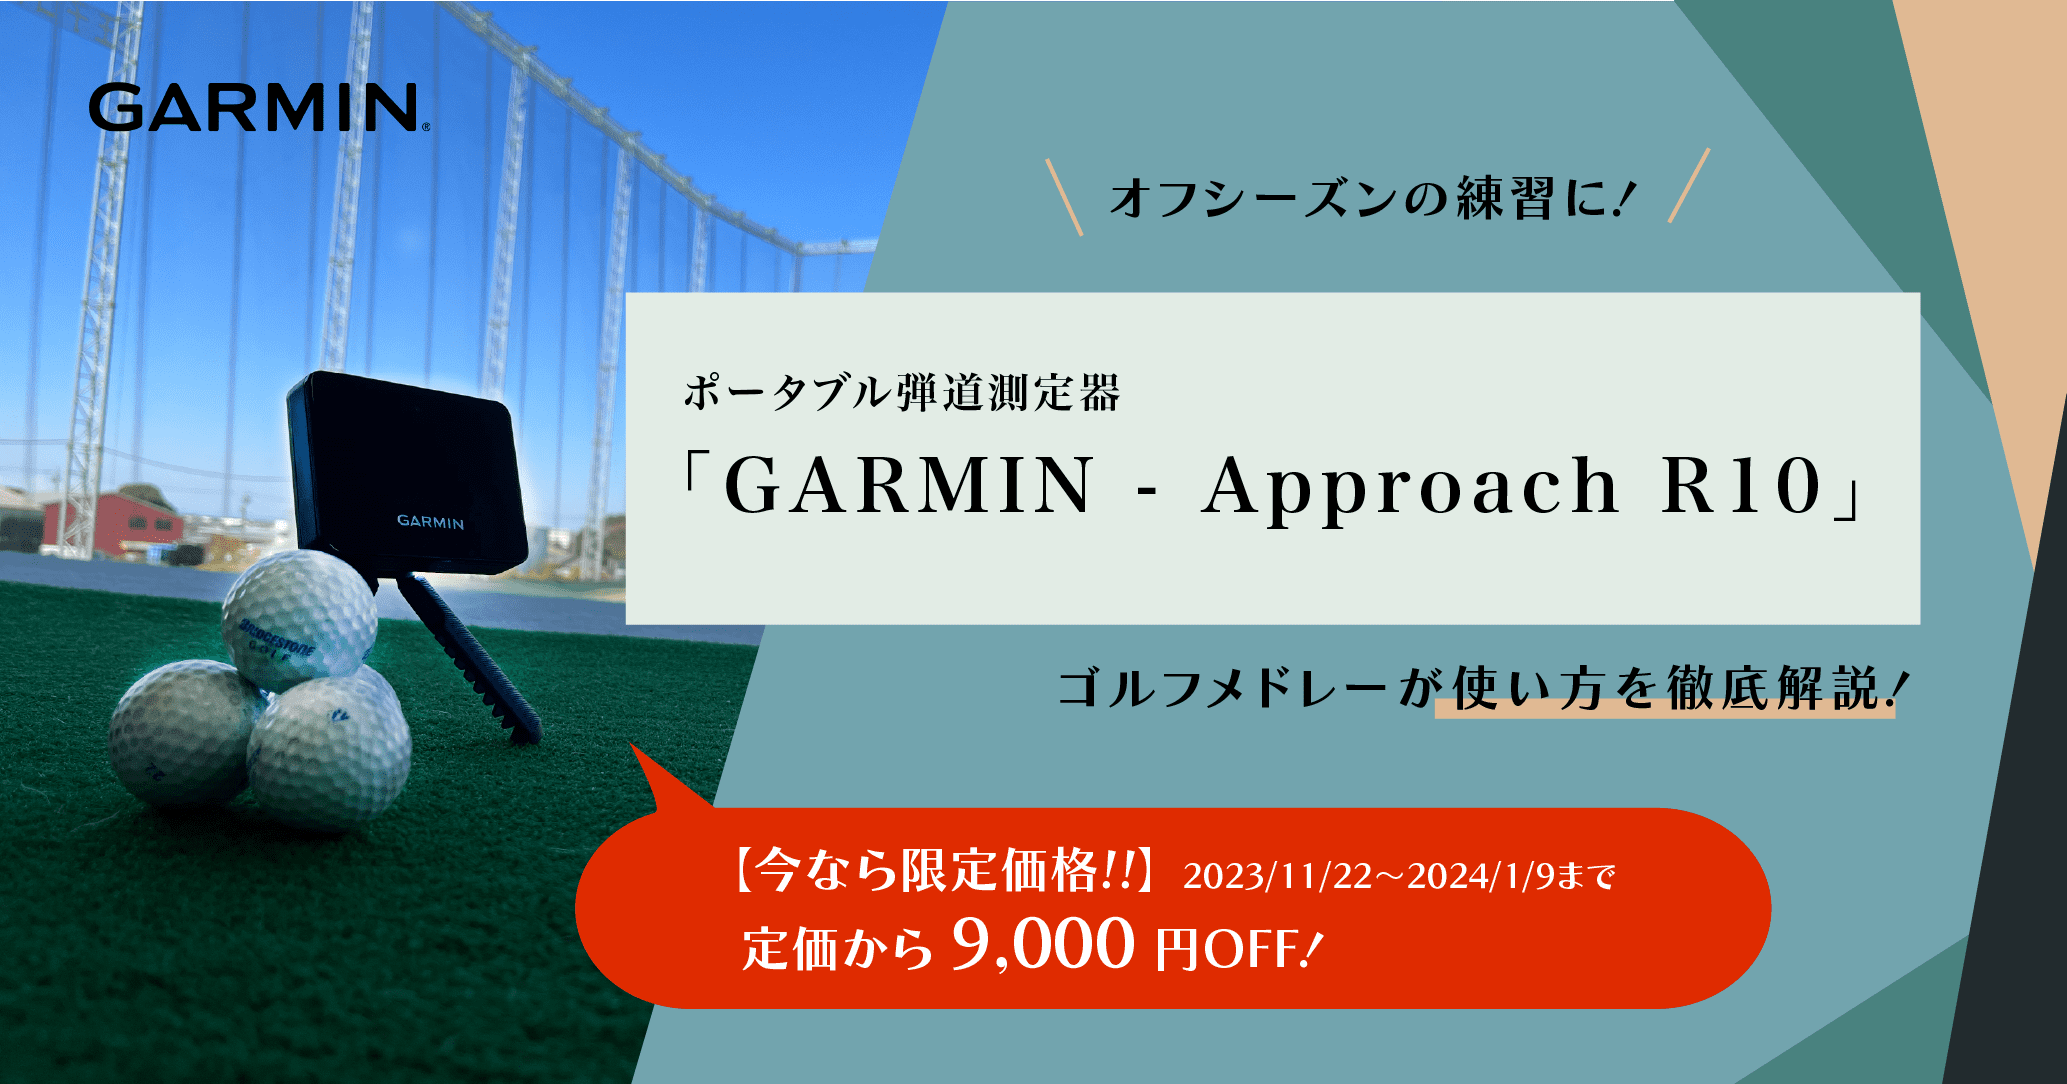 GARMIN ポータブル弾道測定器 Approach R10